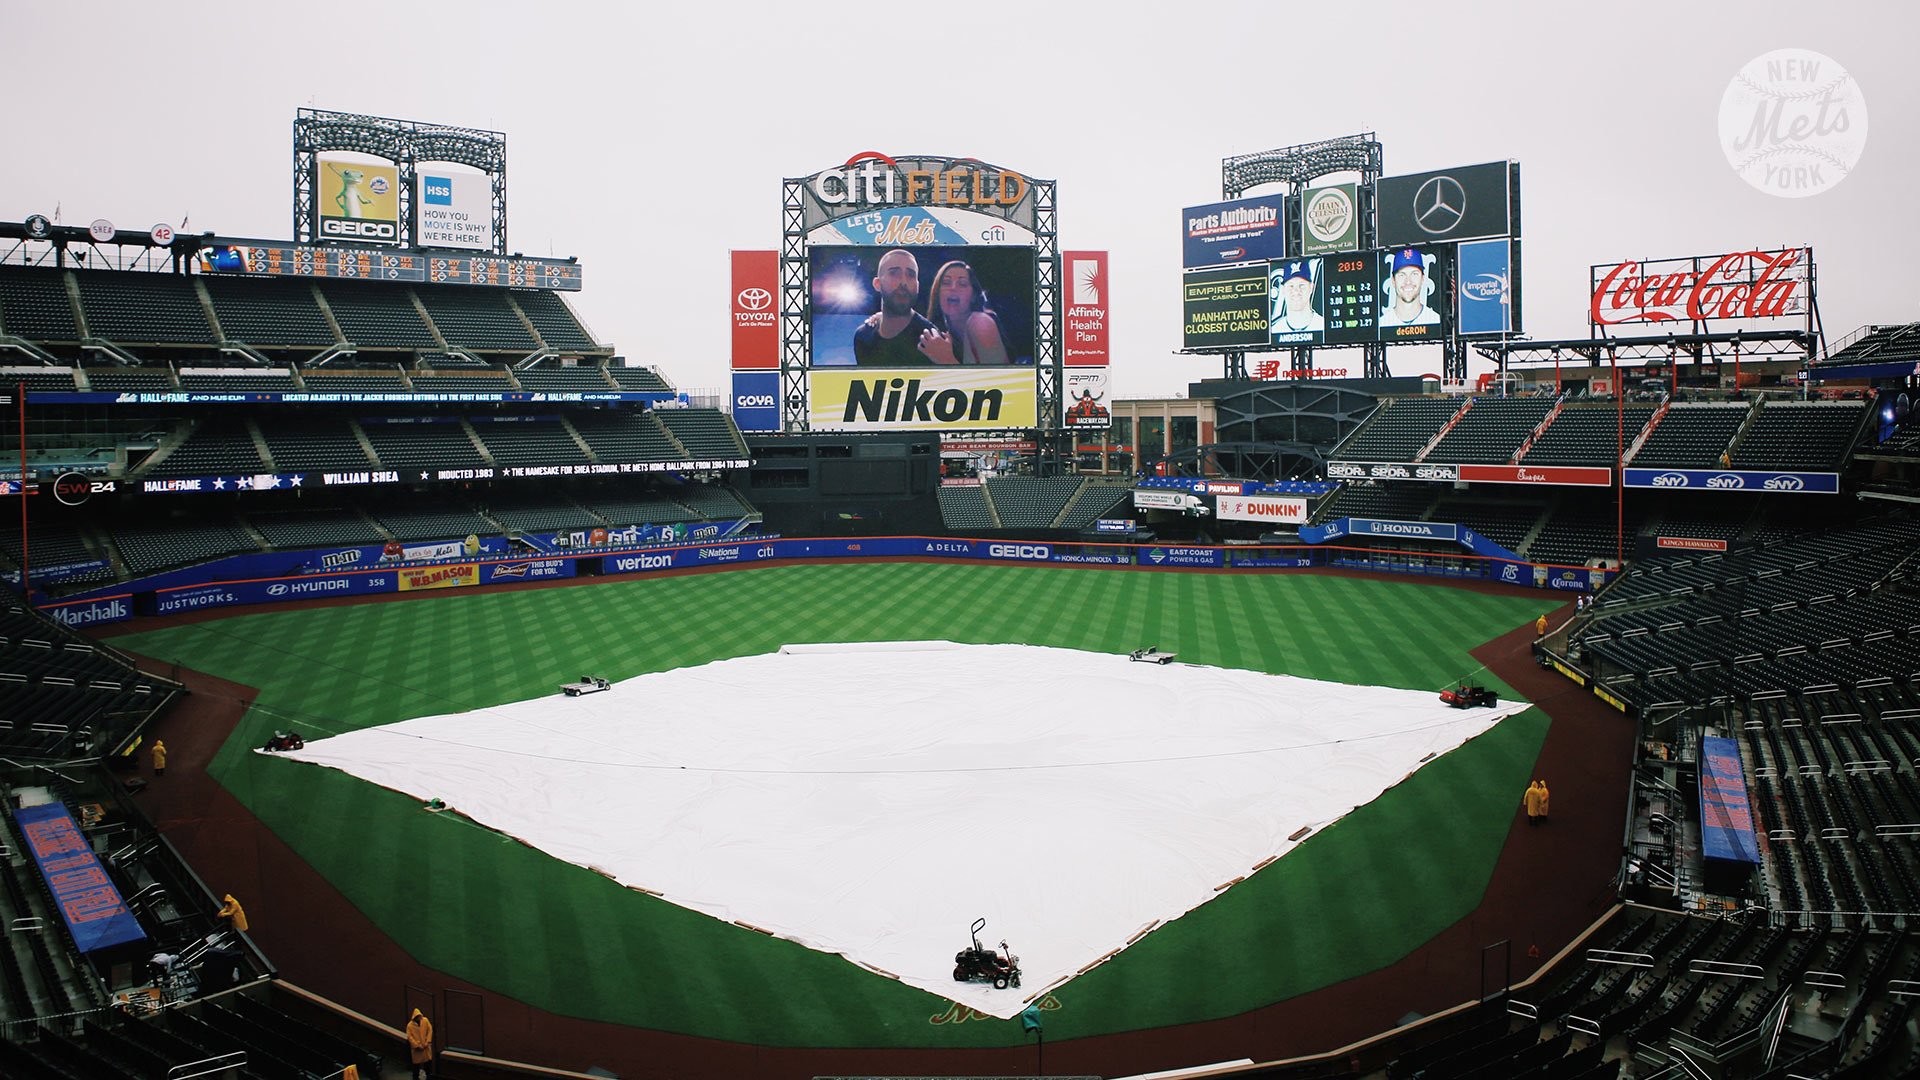 New York Mets Citi Field Wallpaper.